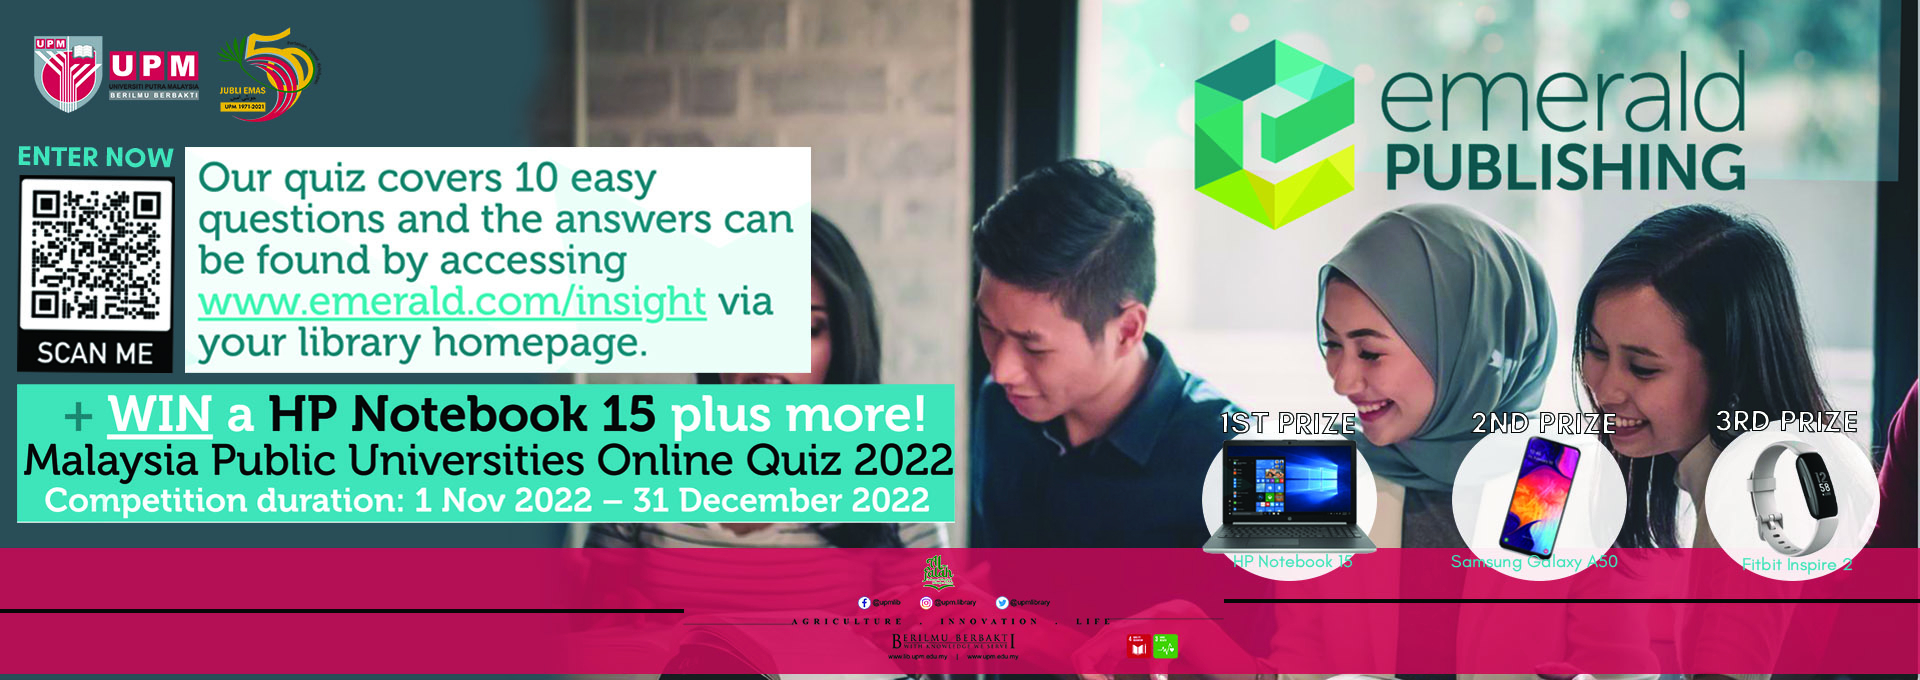 Emerald Malaysia - Public Universities Online Quiz 2022